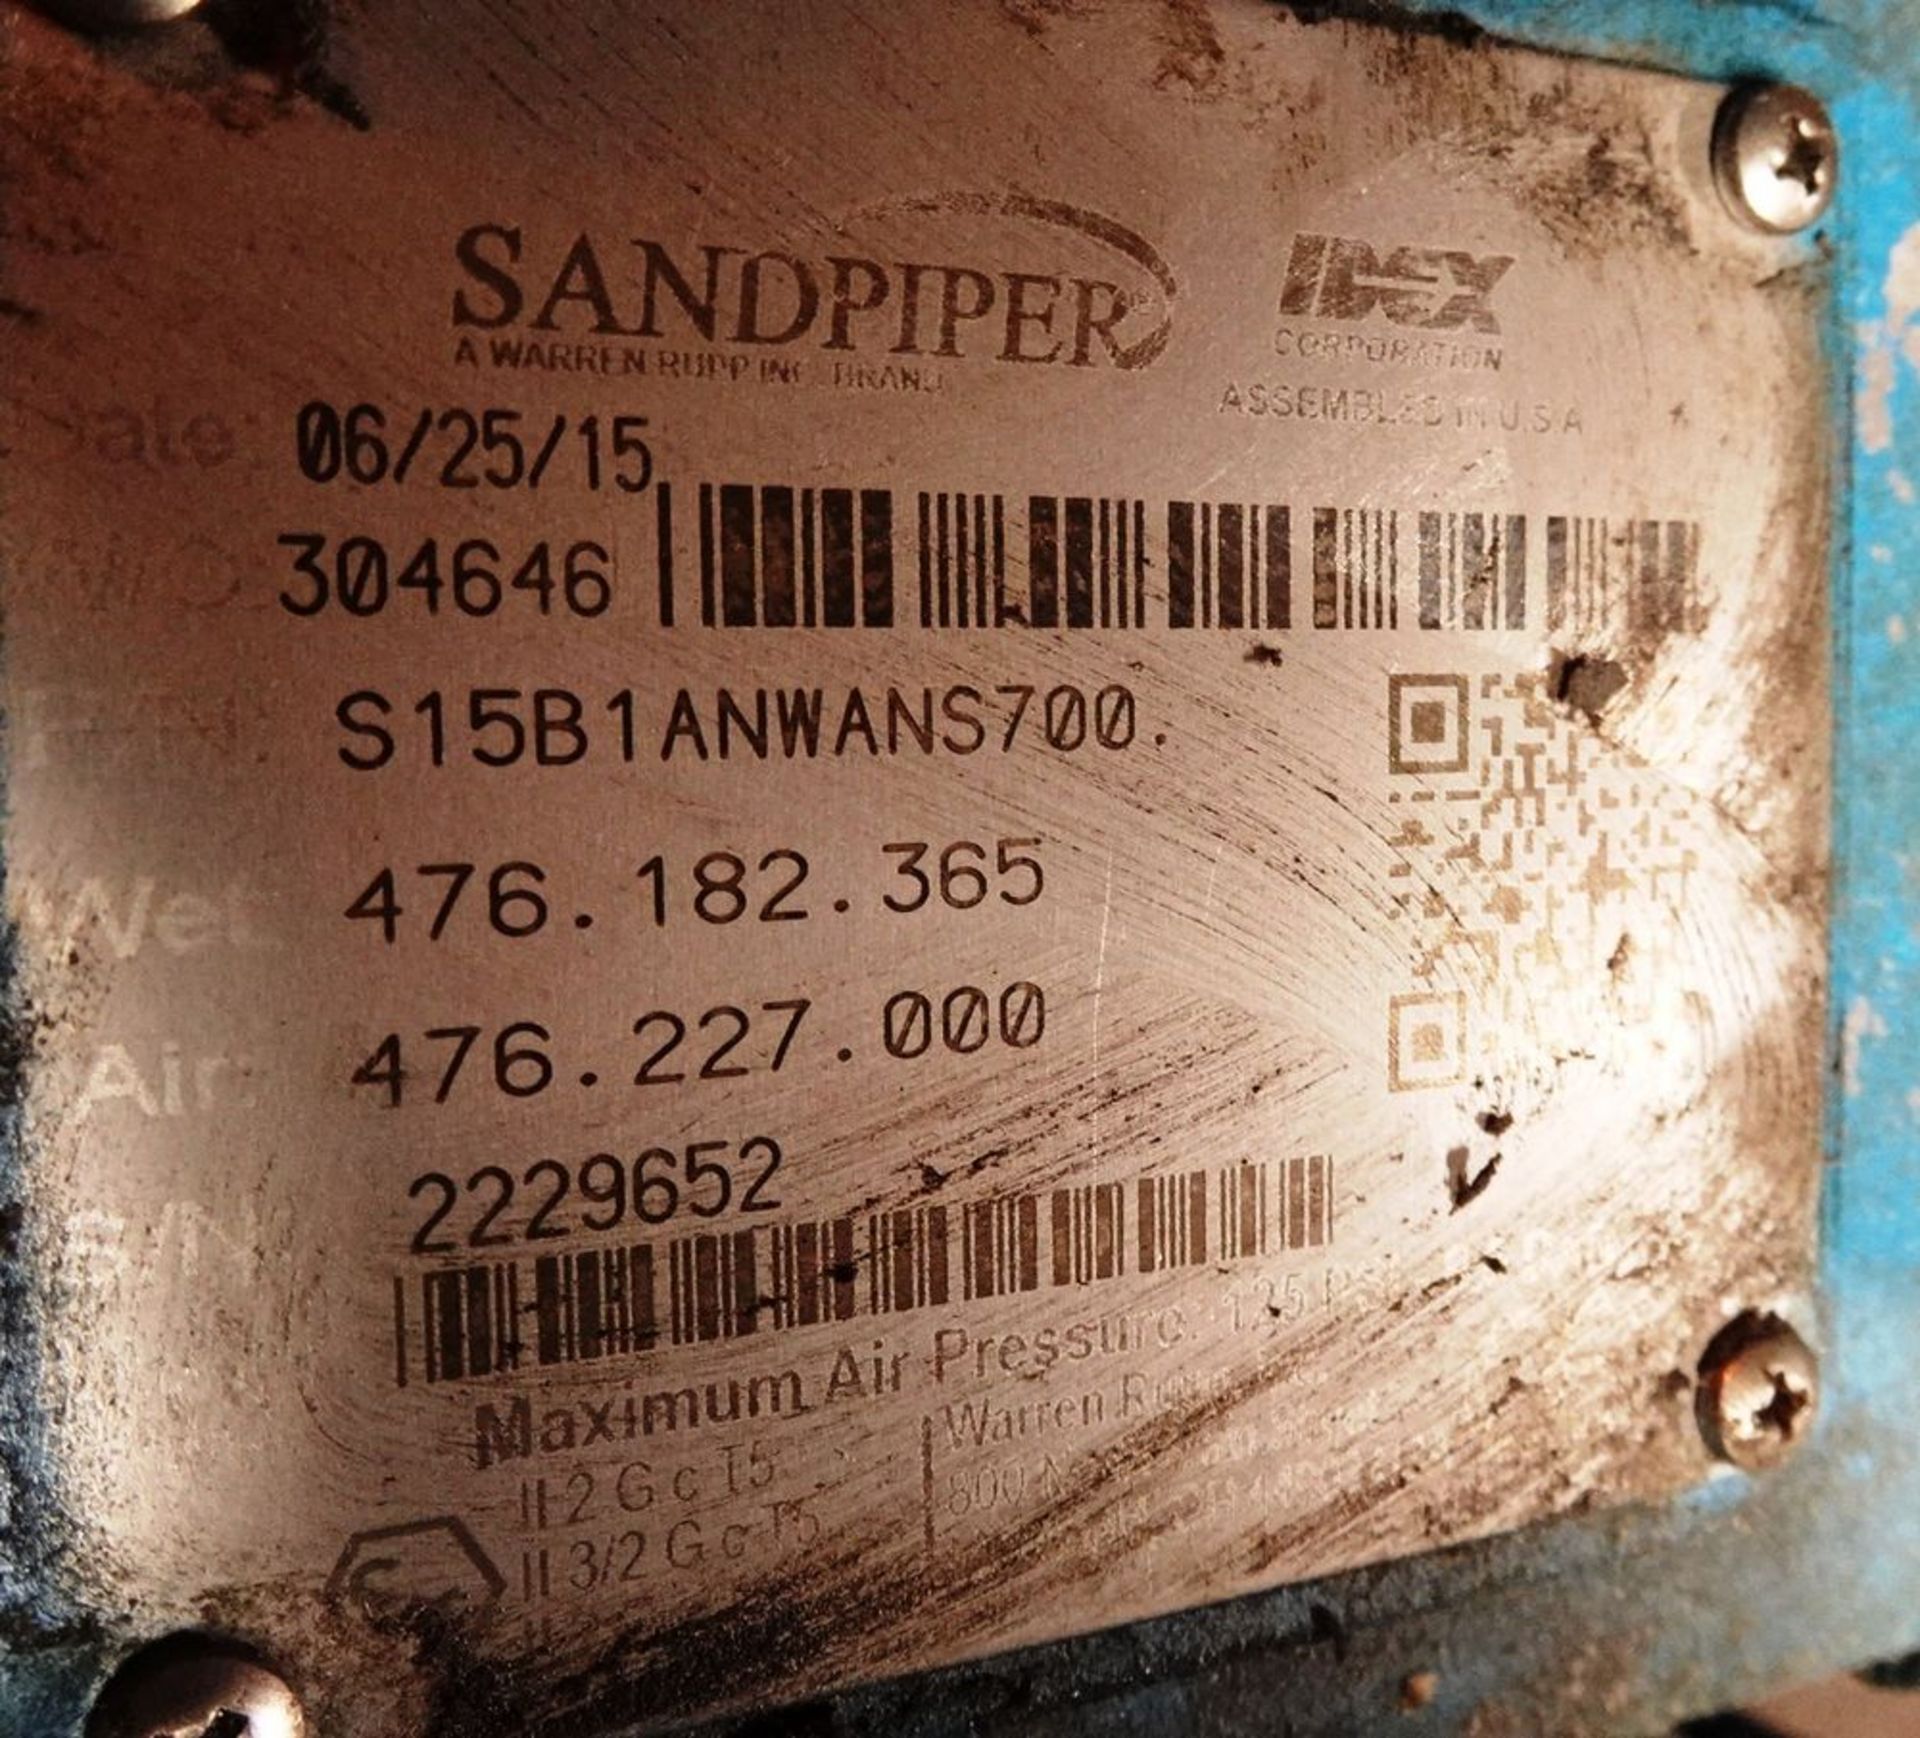 2015 SANDPIPER 304646 PNEUMTIC TRANSFER PUMP - Image 2 of 2